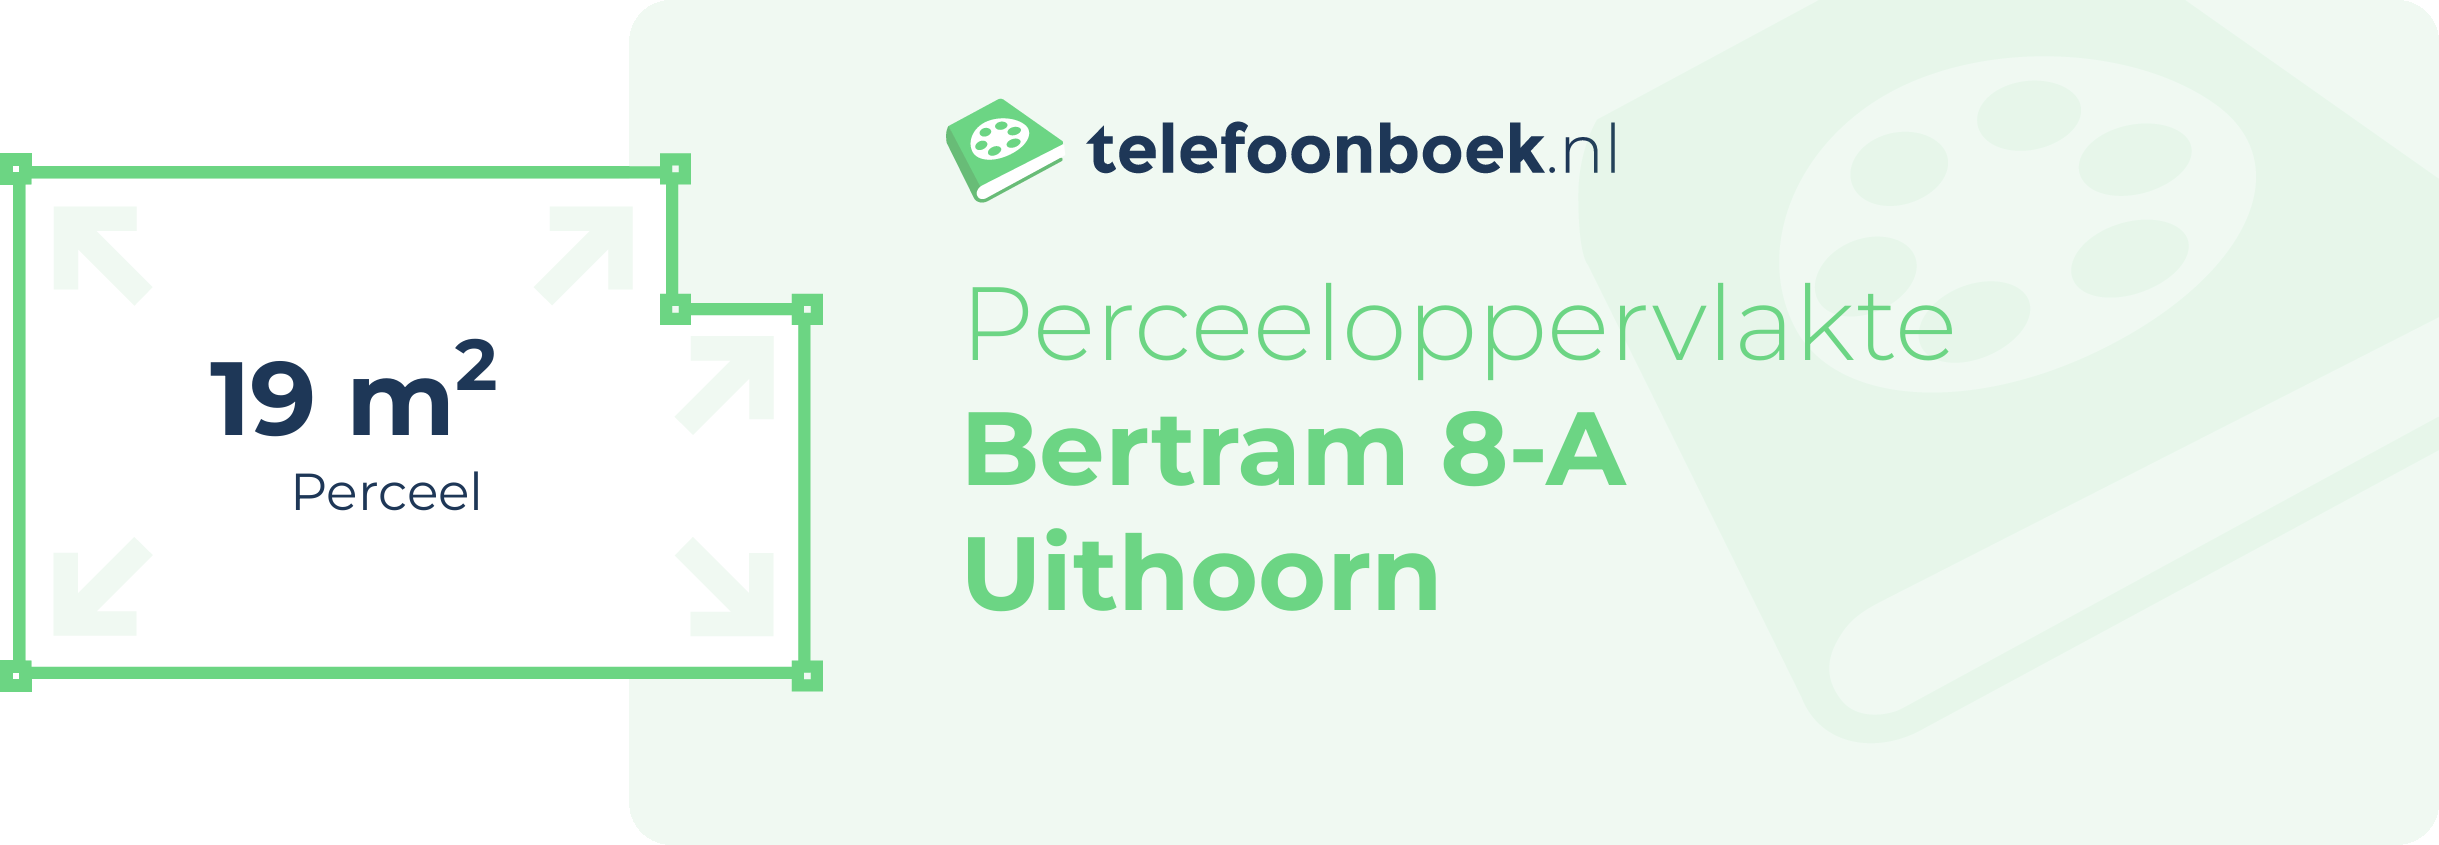 Perceeloppervlakte Bertram 8-A Uithoorn